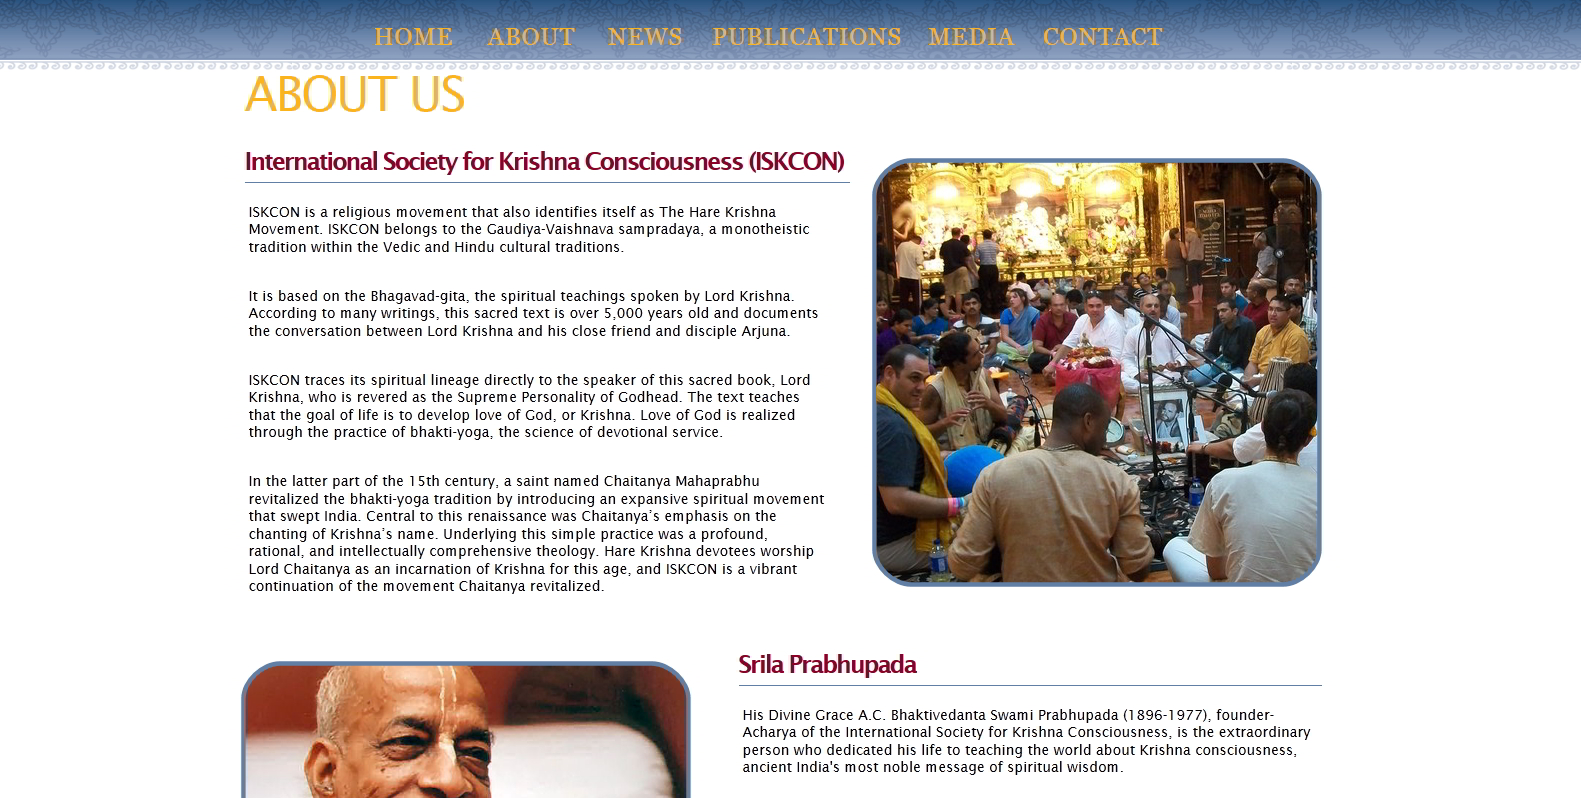 The website provides basic information on ISKCON and Srila Prabhupada